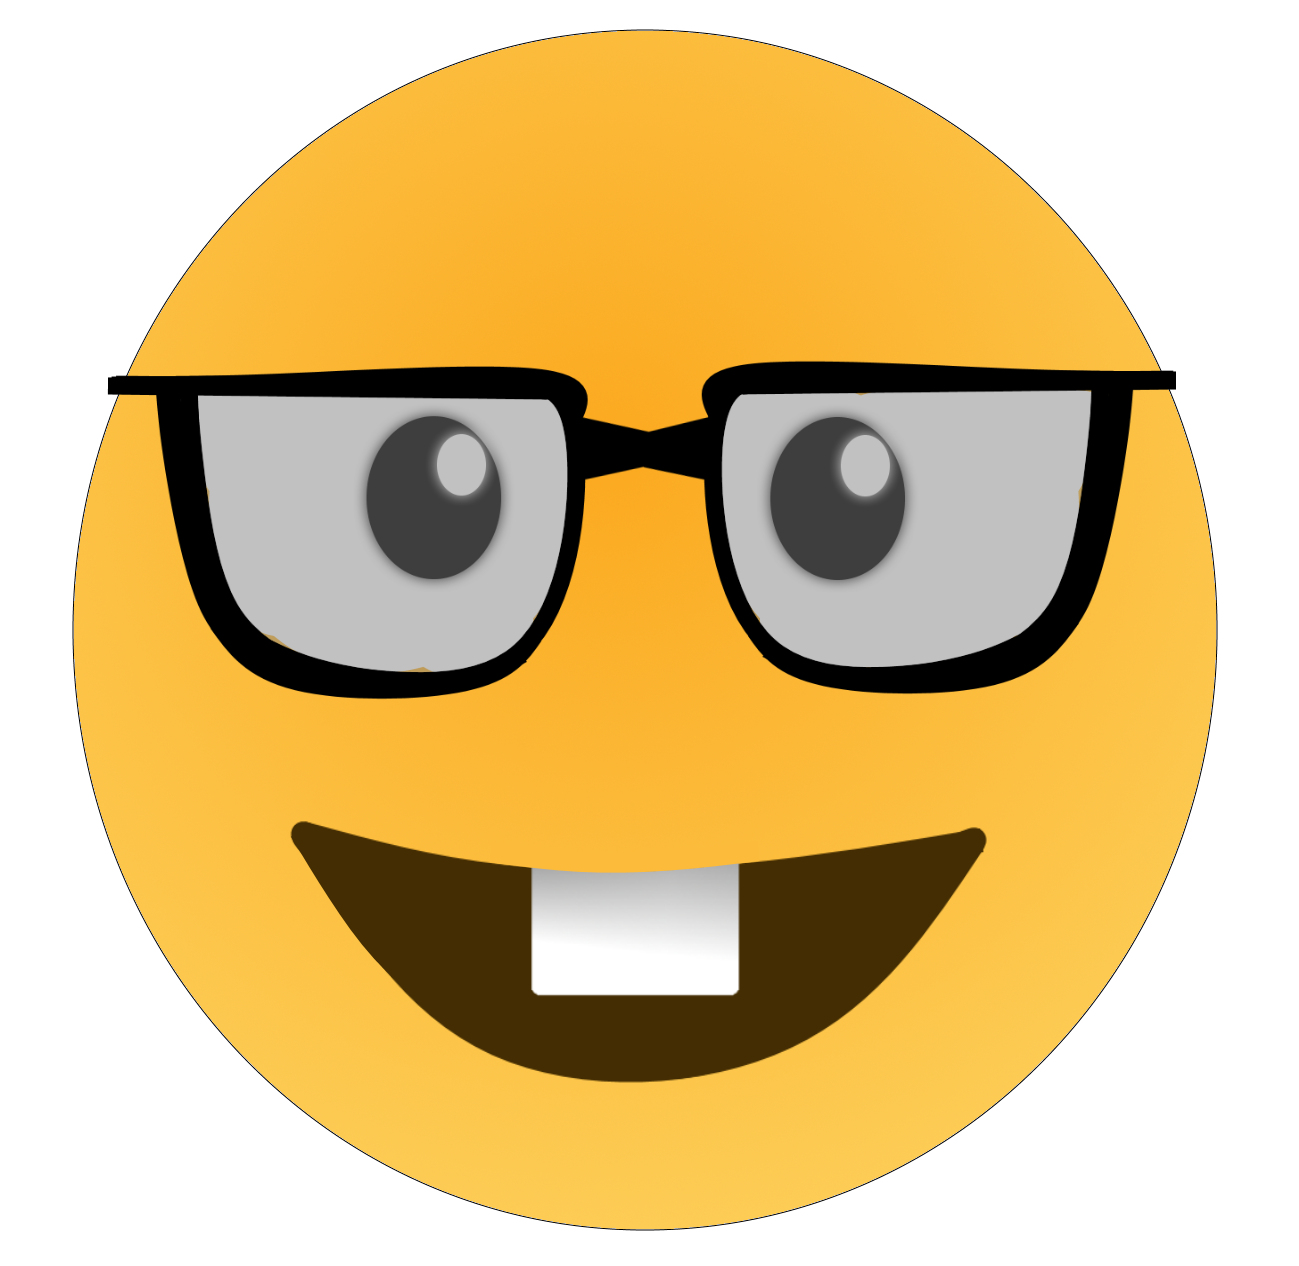 Download PNG image - Yellow Face Emoji PNG Transparent Image 